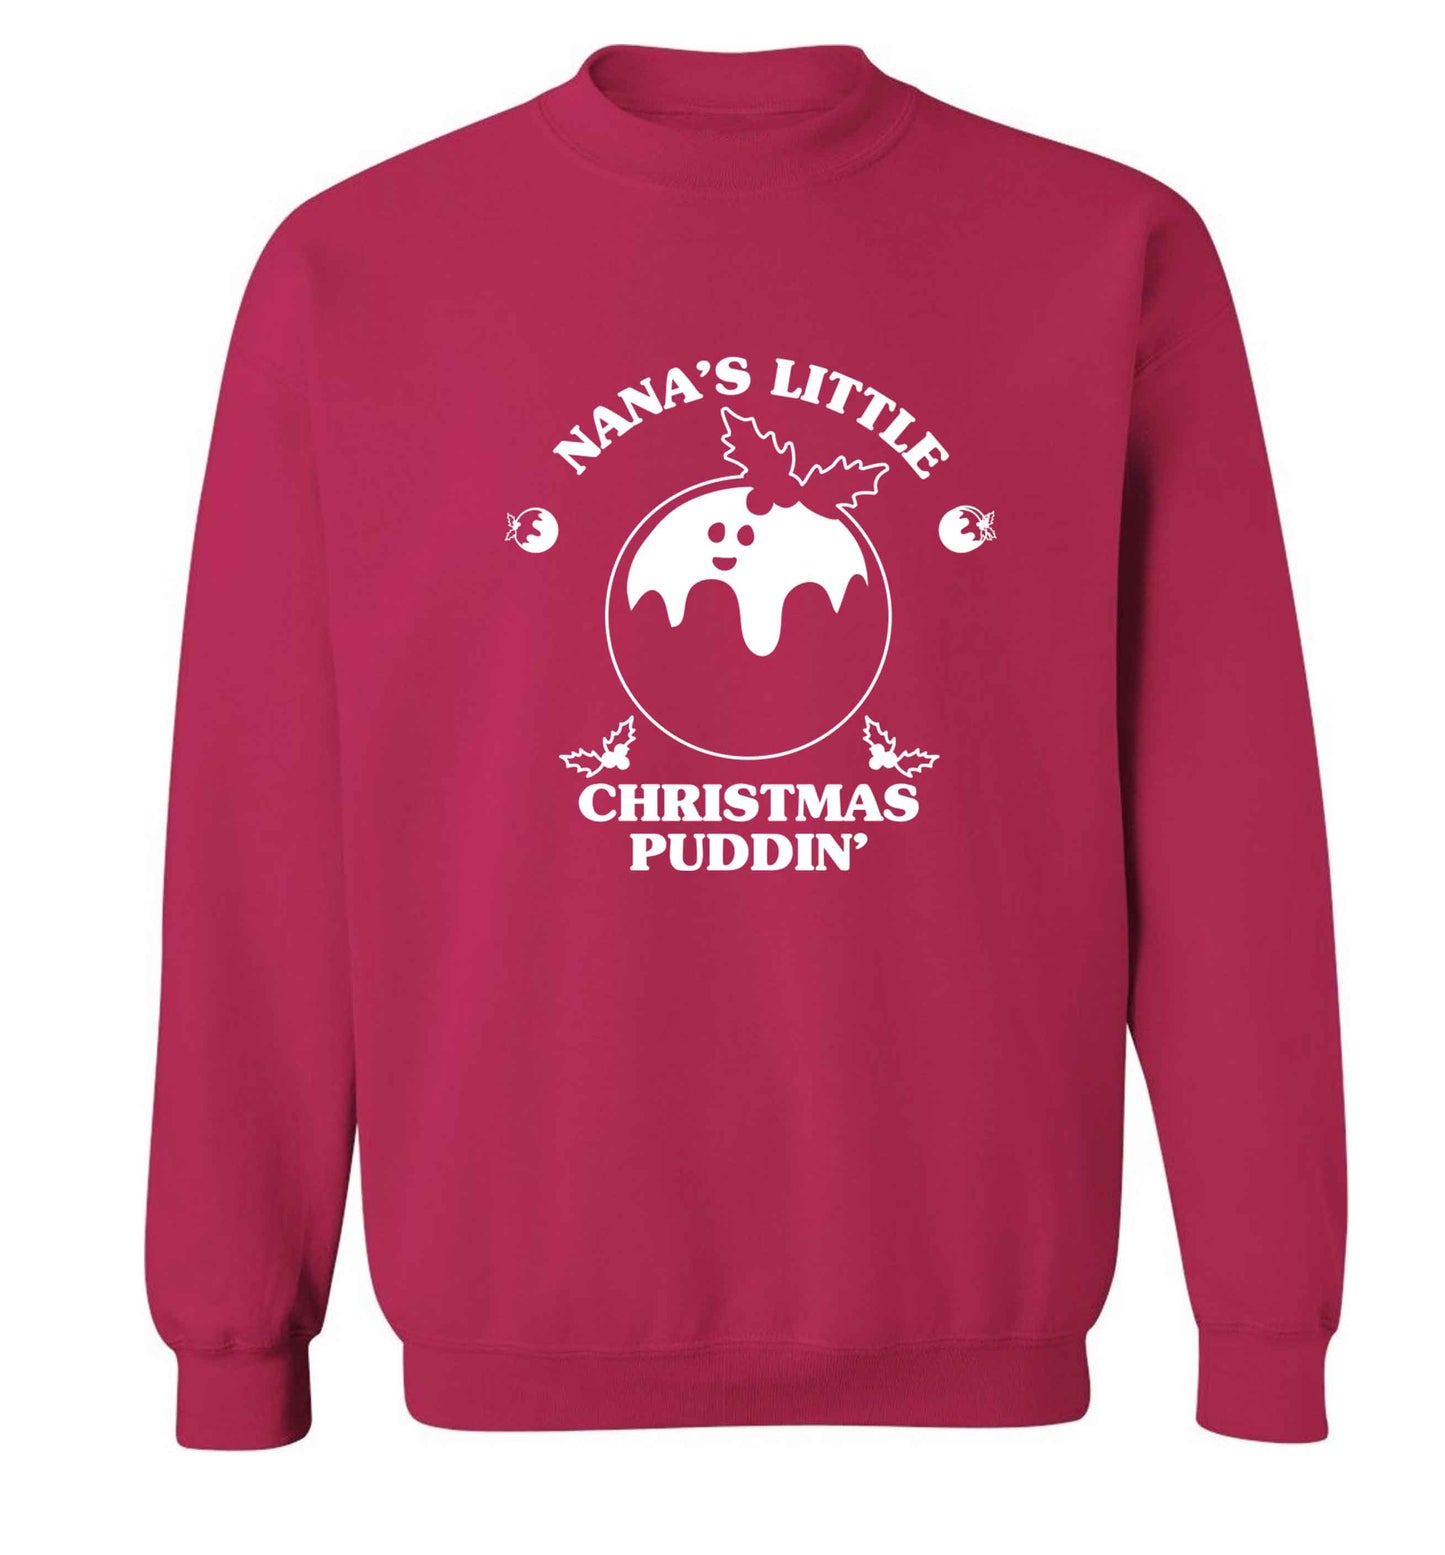 Nana's little Christmas puddin' Adult's unisex pink Sweater 2XL